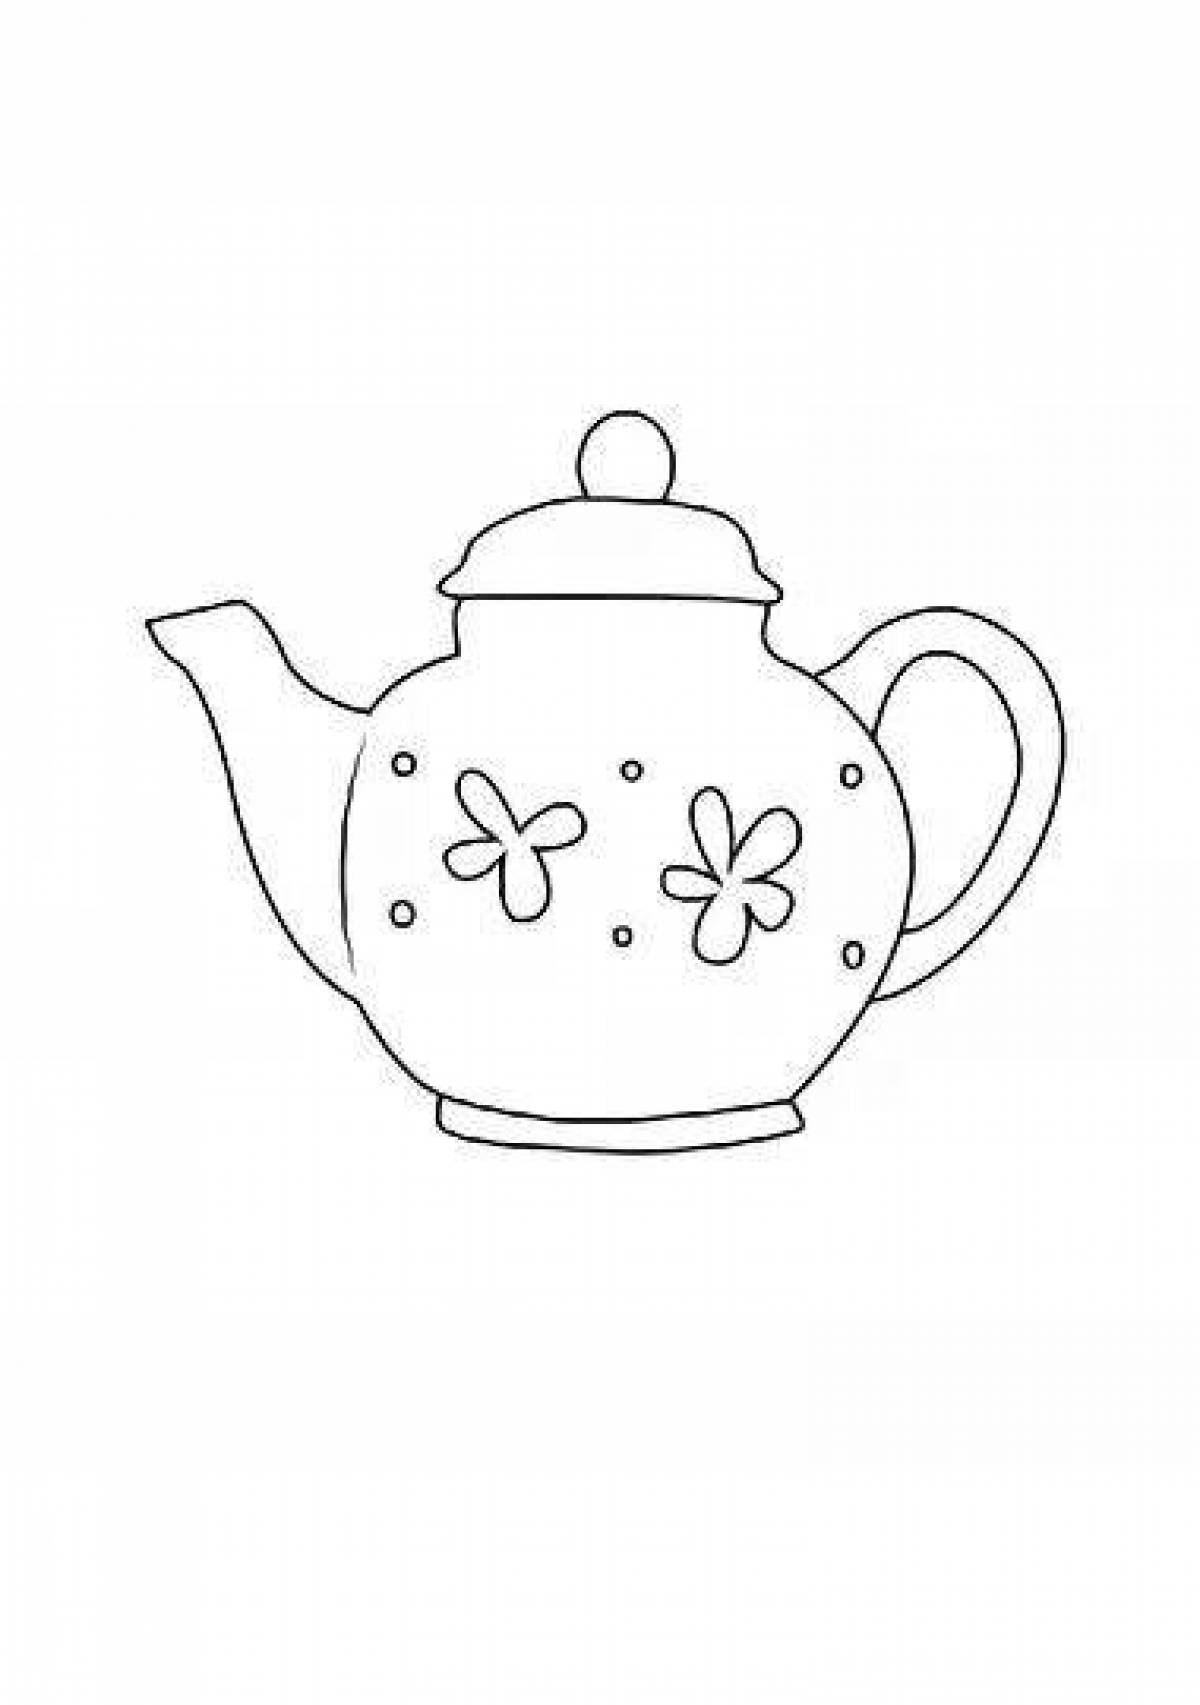 Fabulous teapot coloring page